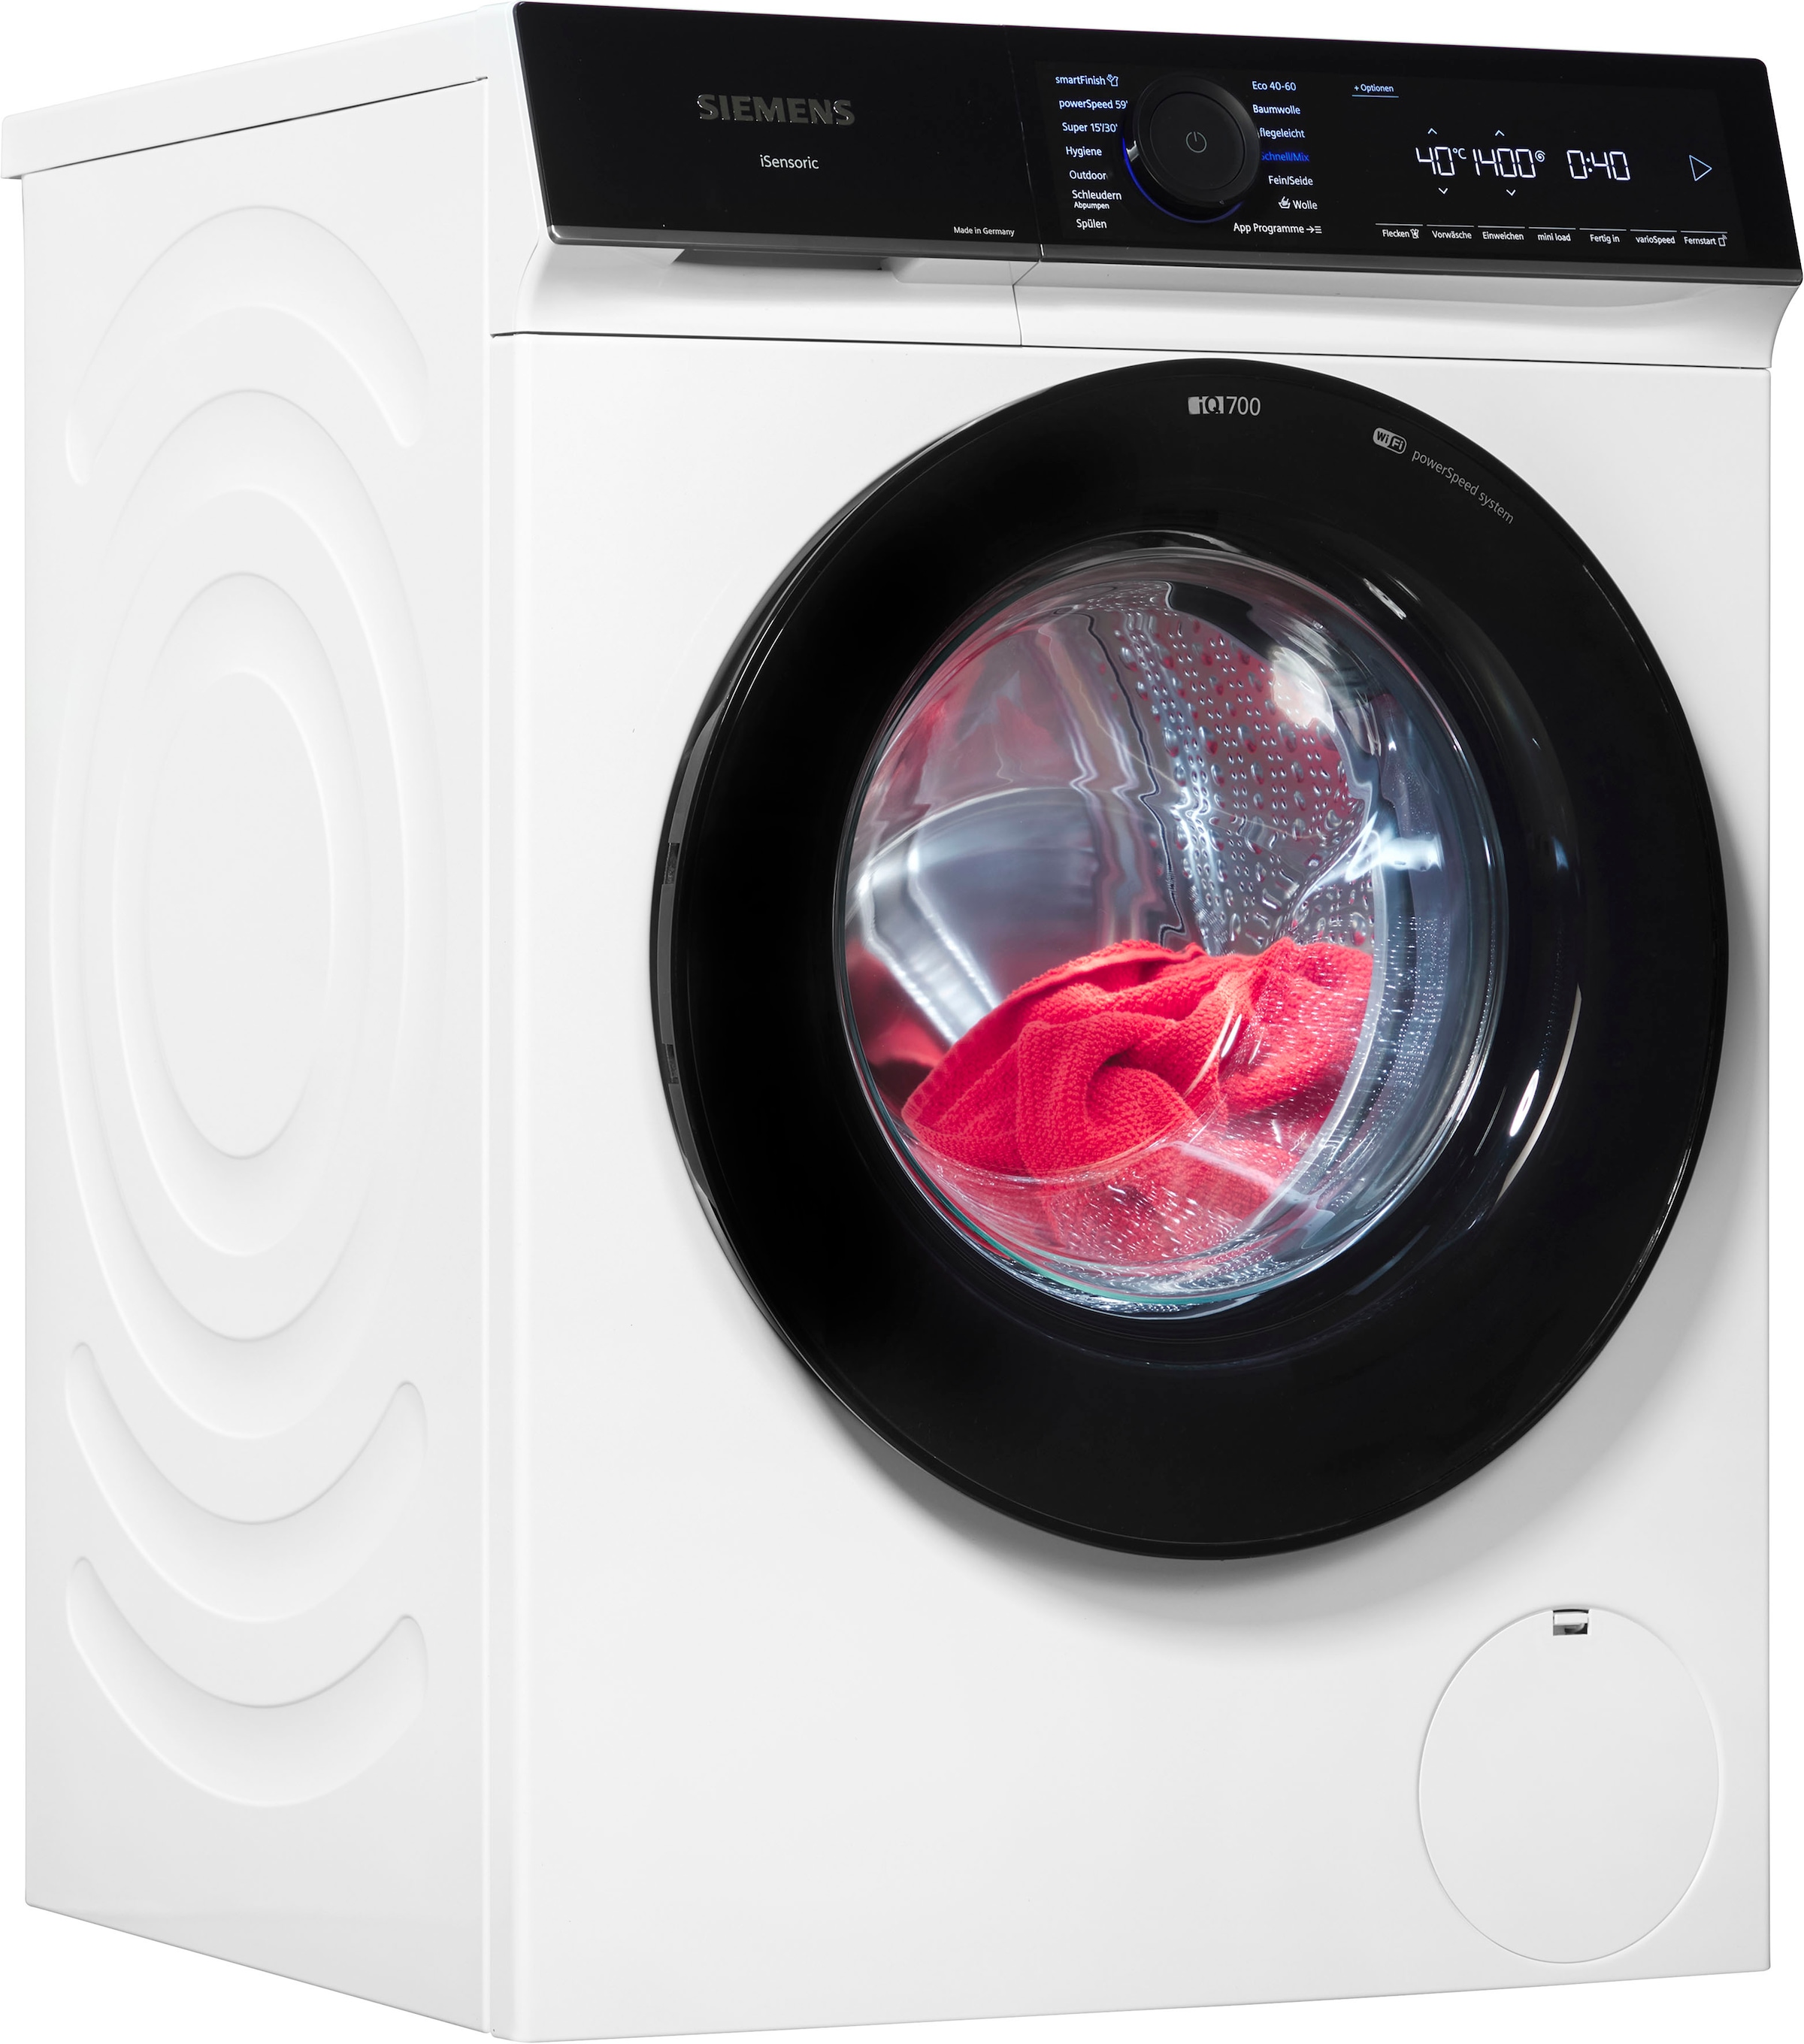 SIEMENS Waschmaschine iQ700, bestellen »WG44B20Z0«, U/min | kg, 1400 WG44B20Z0, BAUR 9